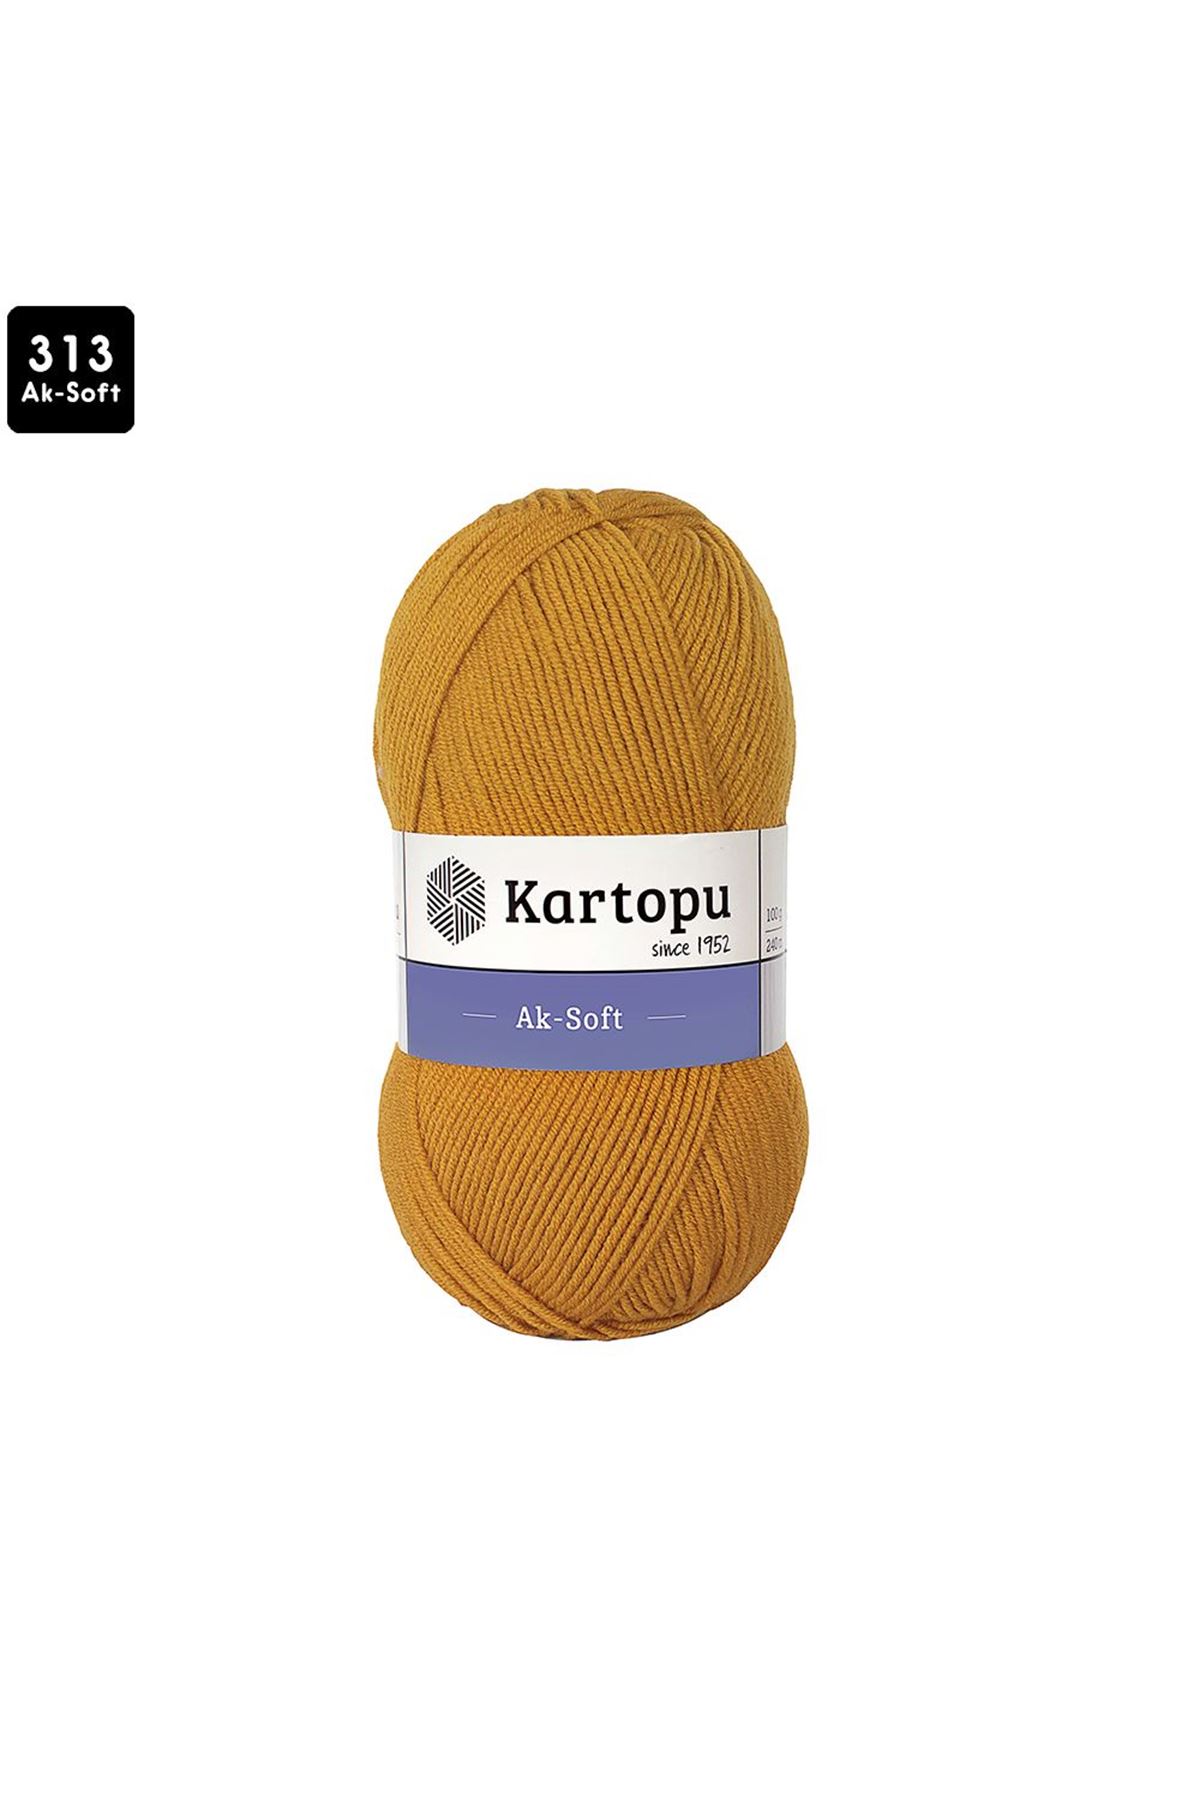 Kartopu Ak-Soft Renk No:313